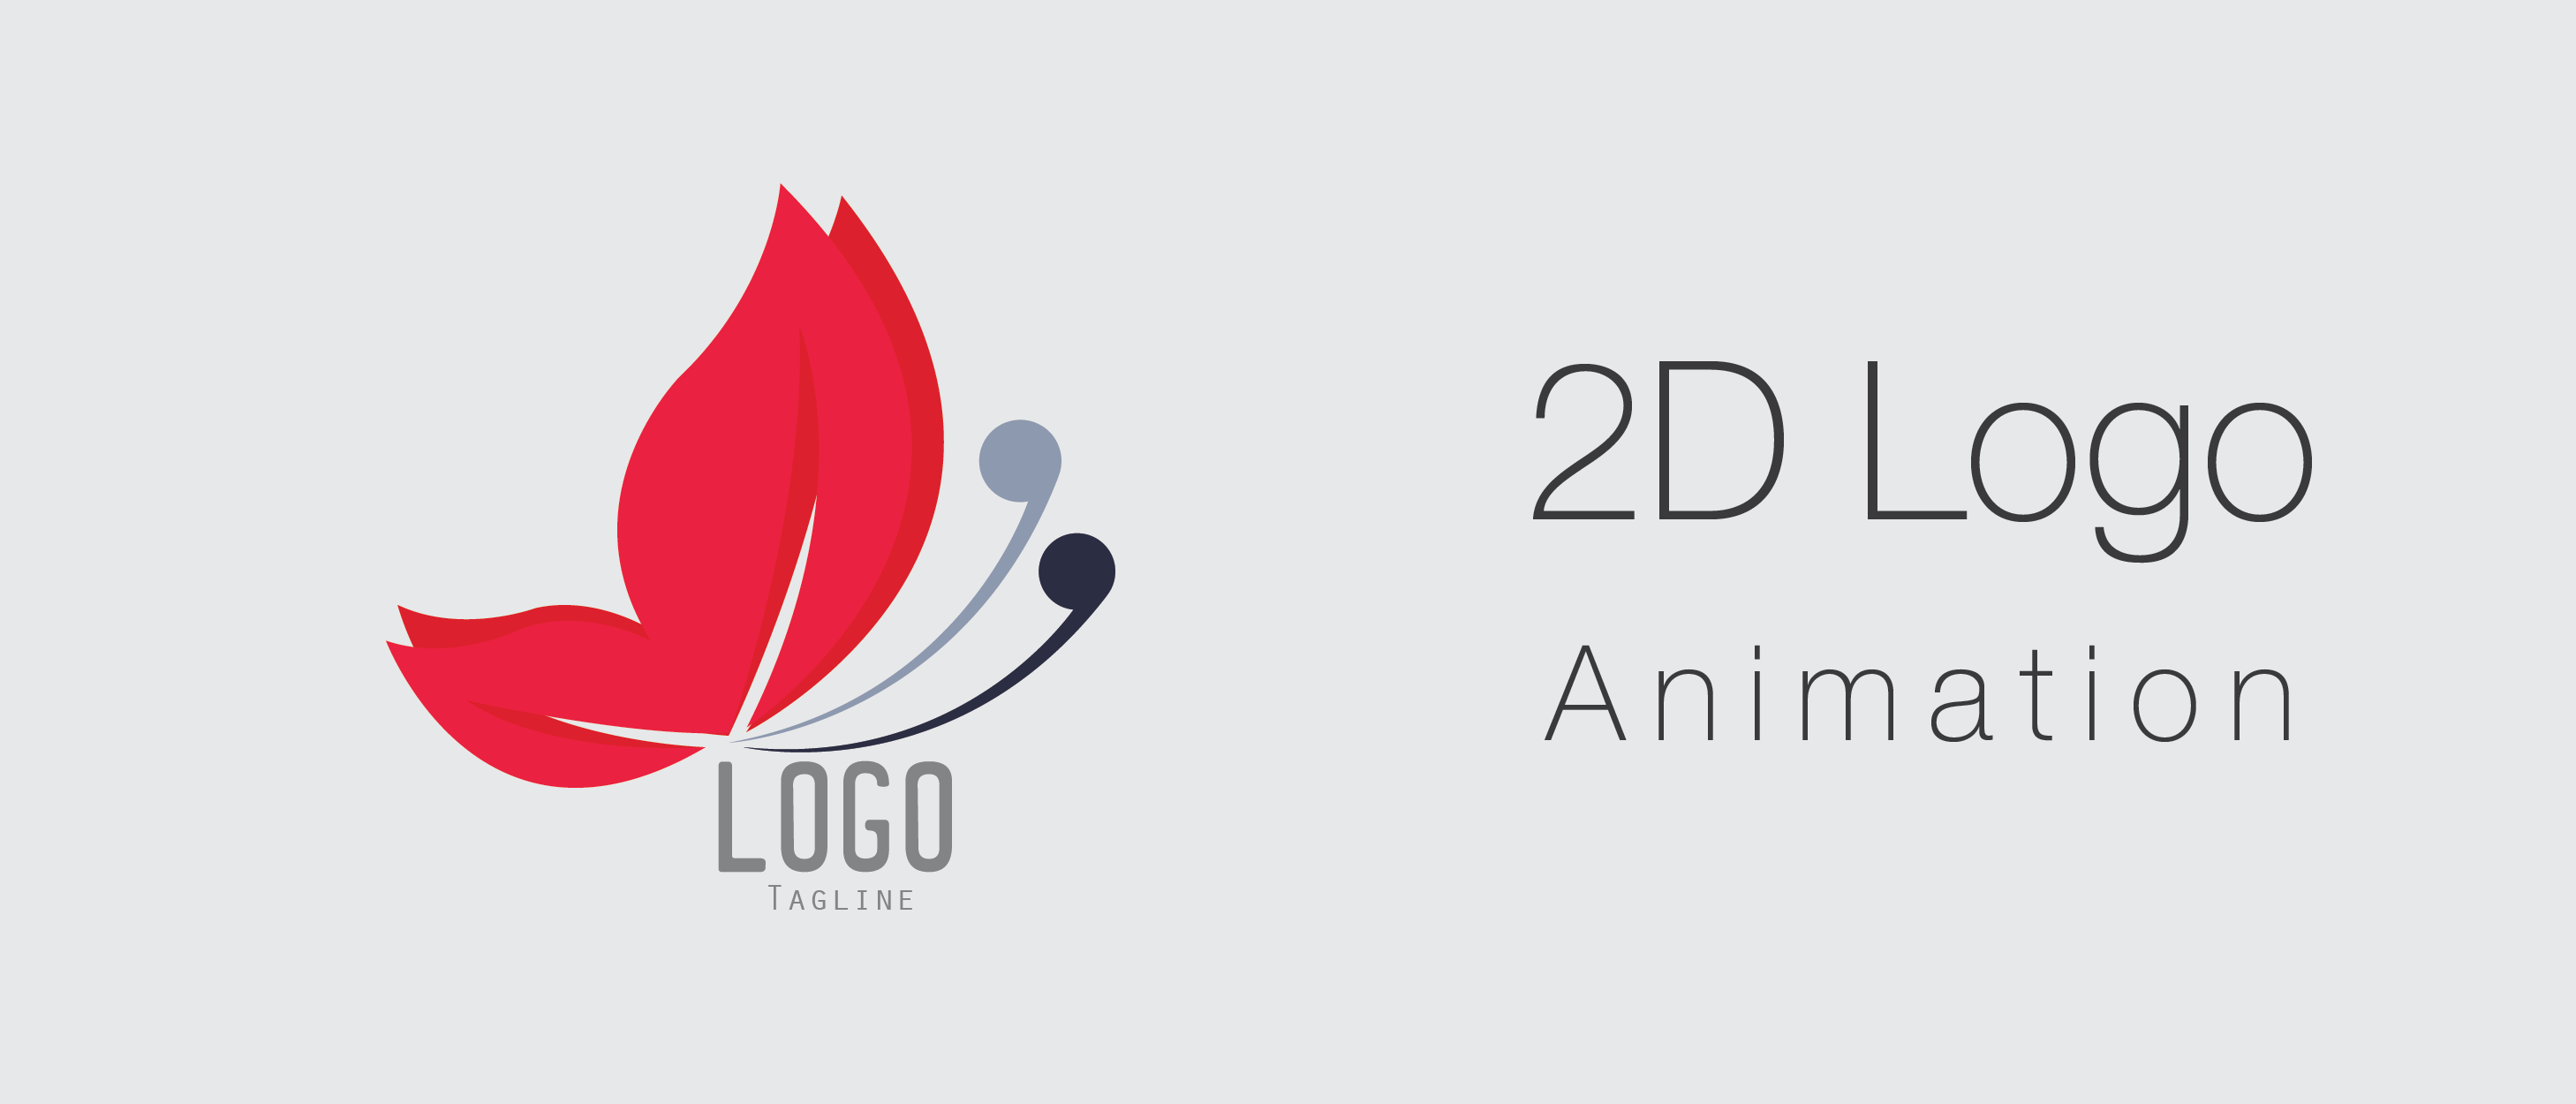 2D Logo - 2D Logo Animation Studio in Bangalore, India